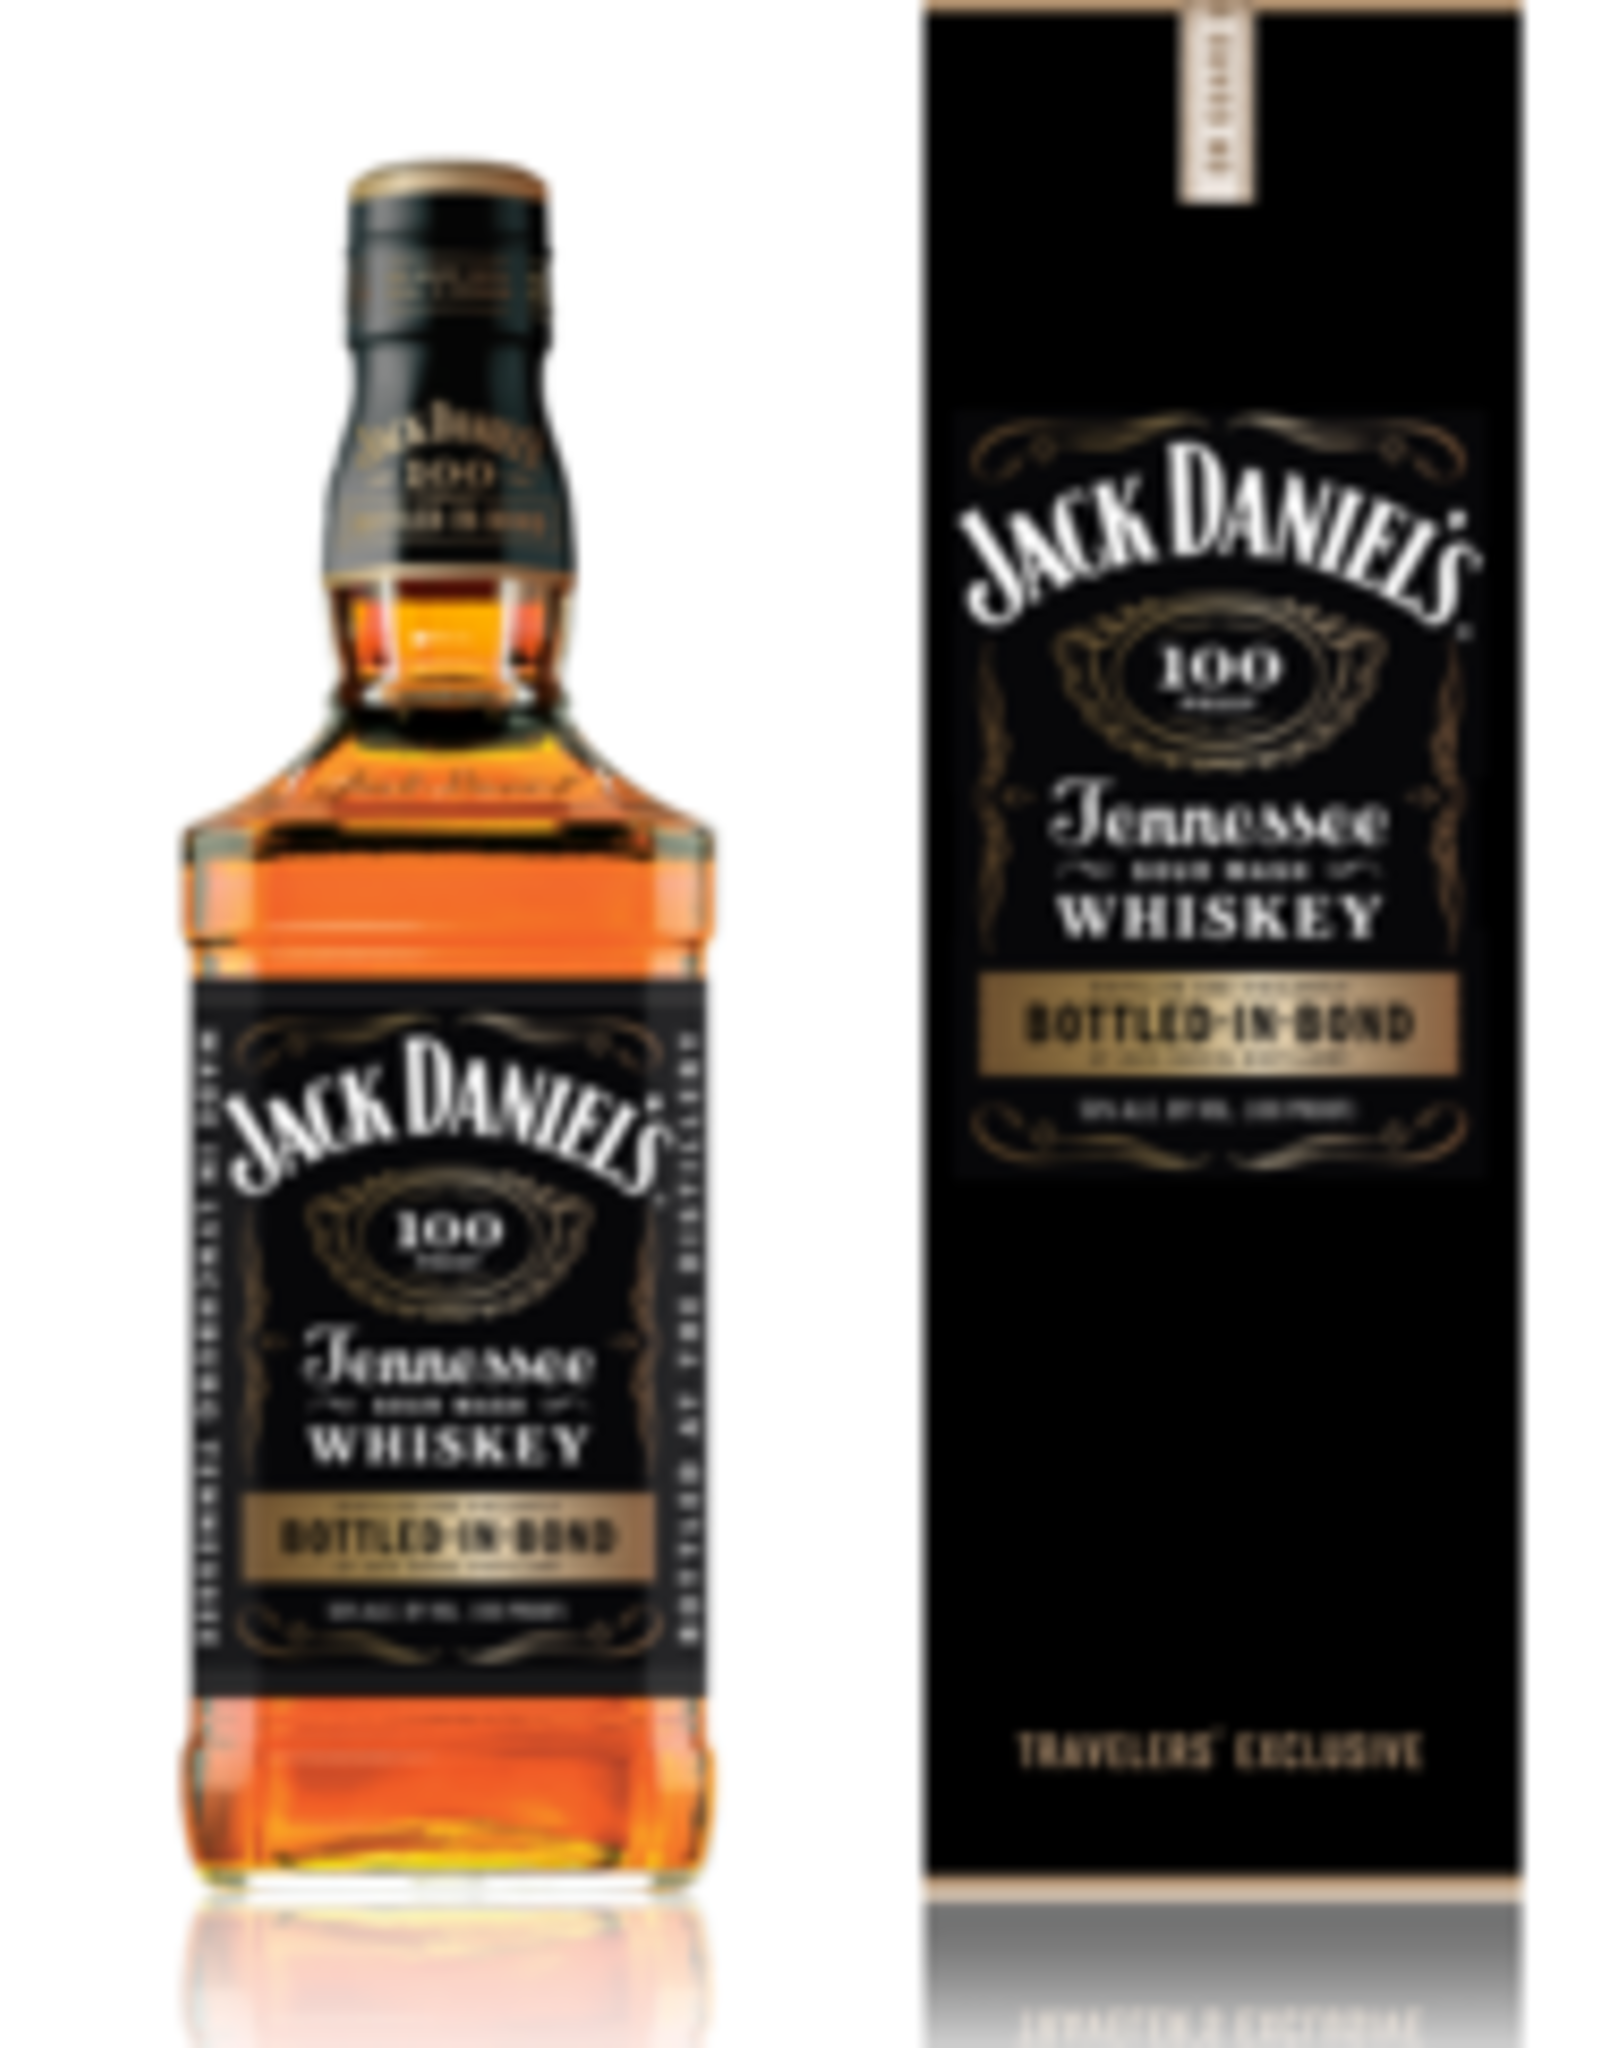 Jack Daniel's Jack Daniel Bottle in Bond Jack 700 mL